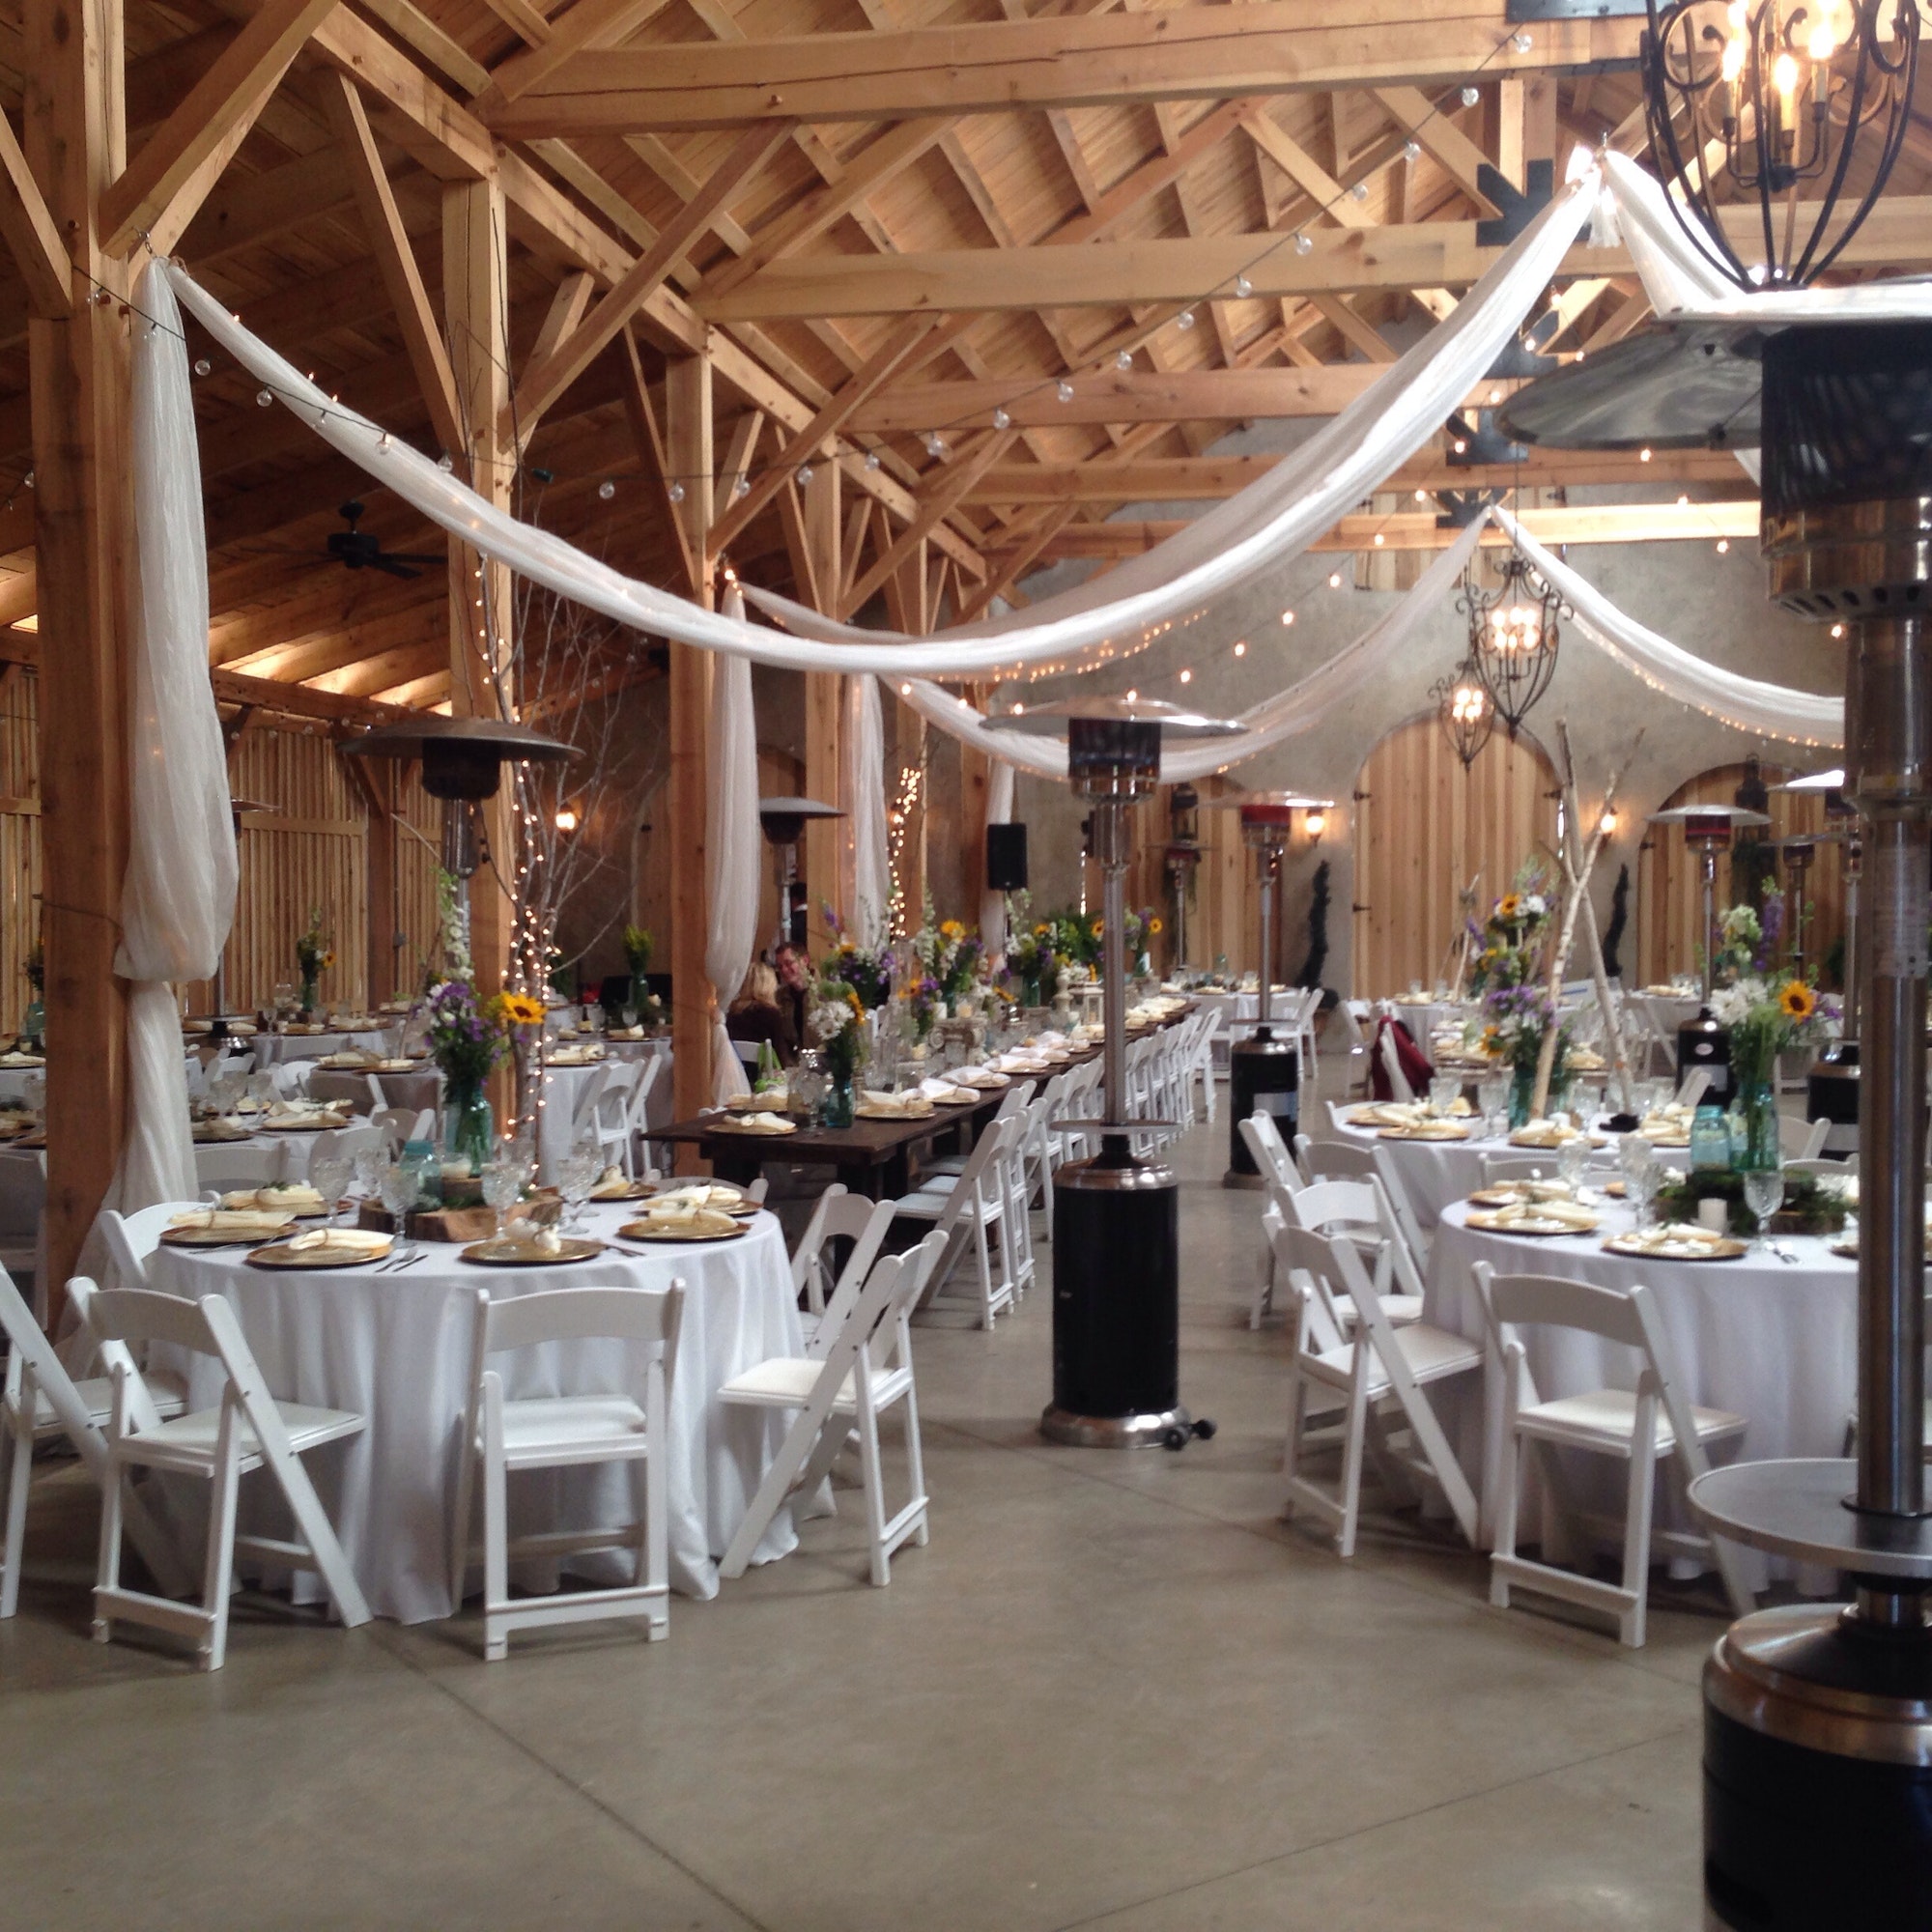 Wedding reception venue inside a timber frame barn here set up